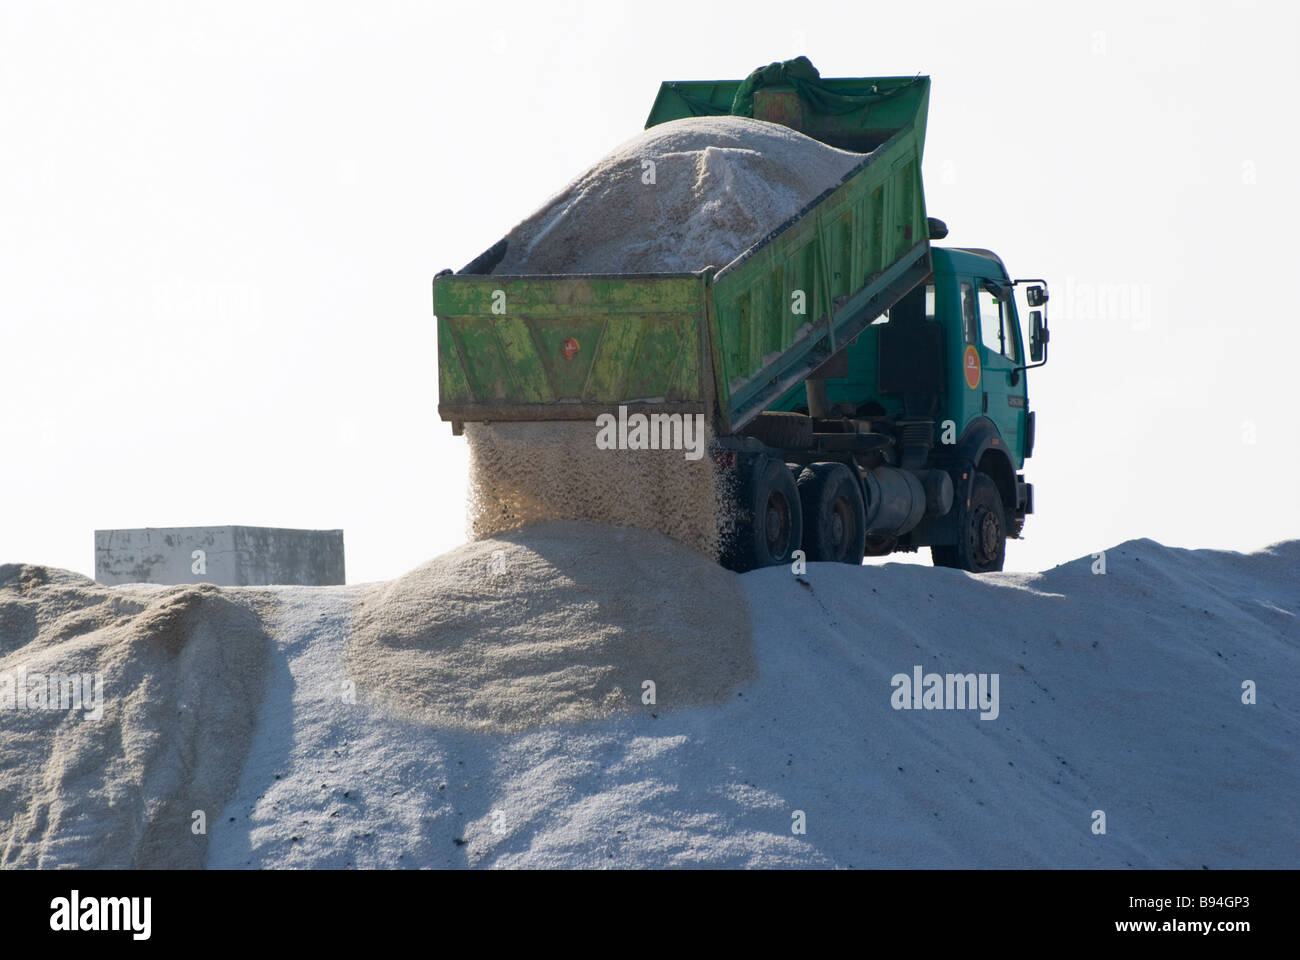 Europa Spagna cadiz sanlucar de barrameda miniere di sale di Spagna Foto Stock